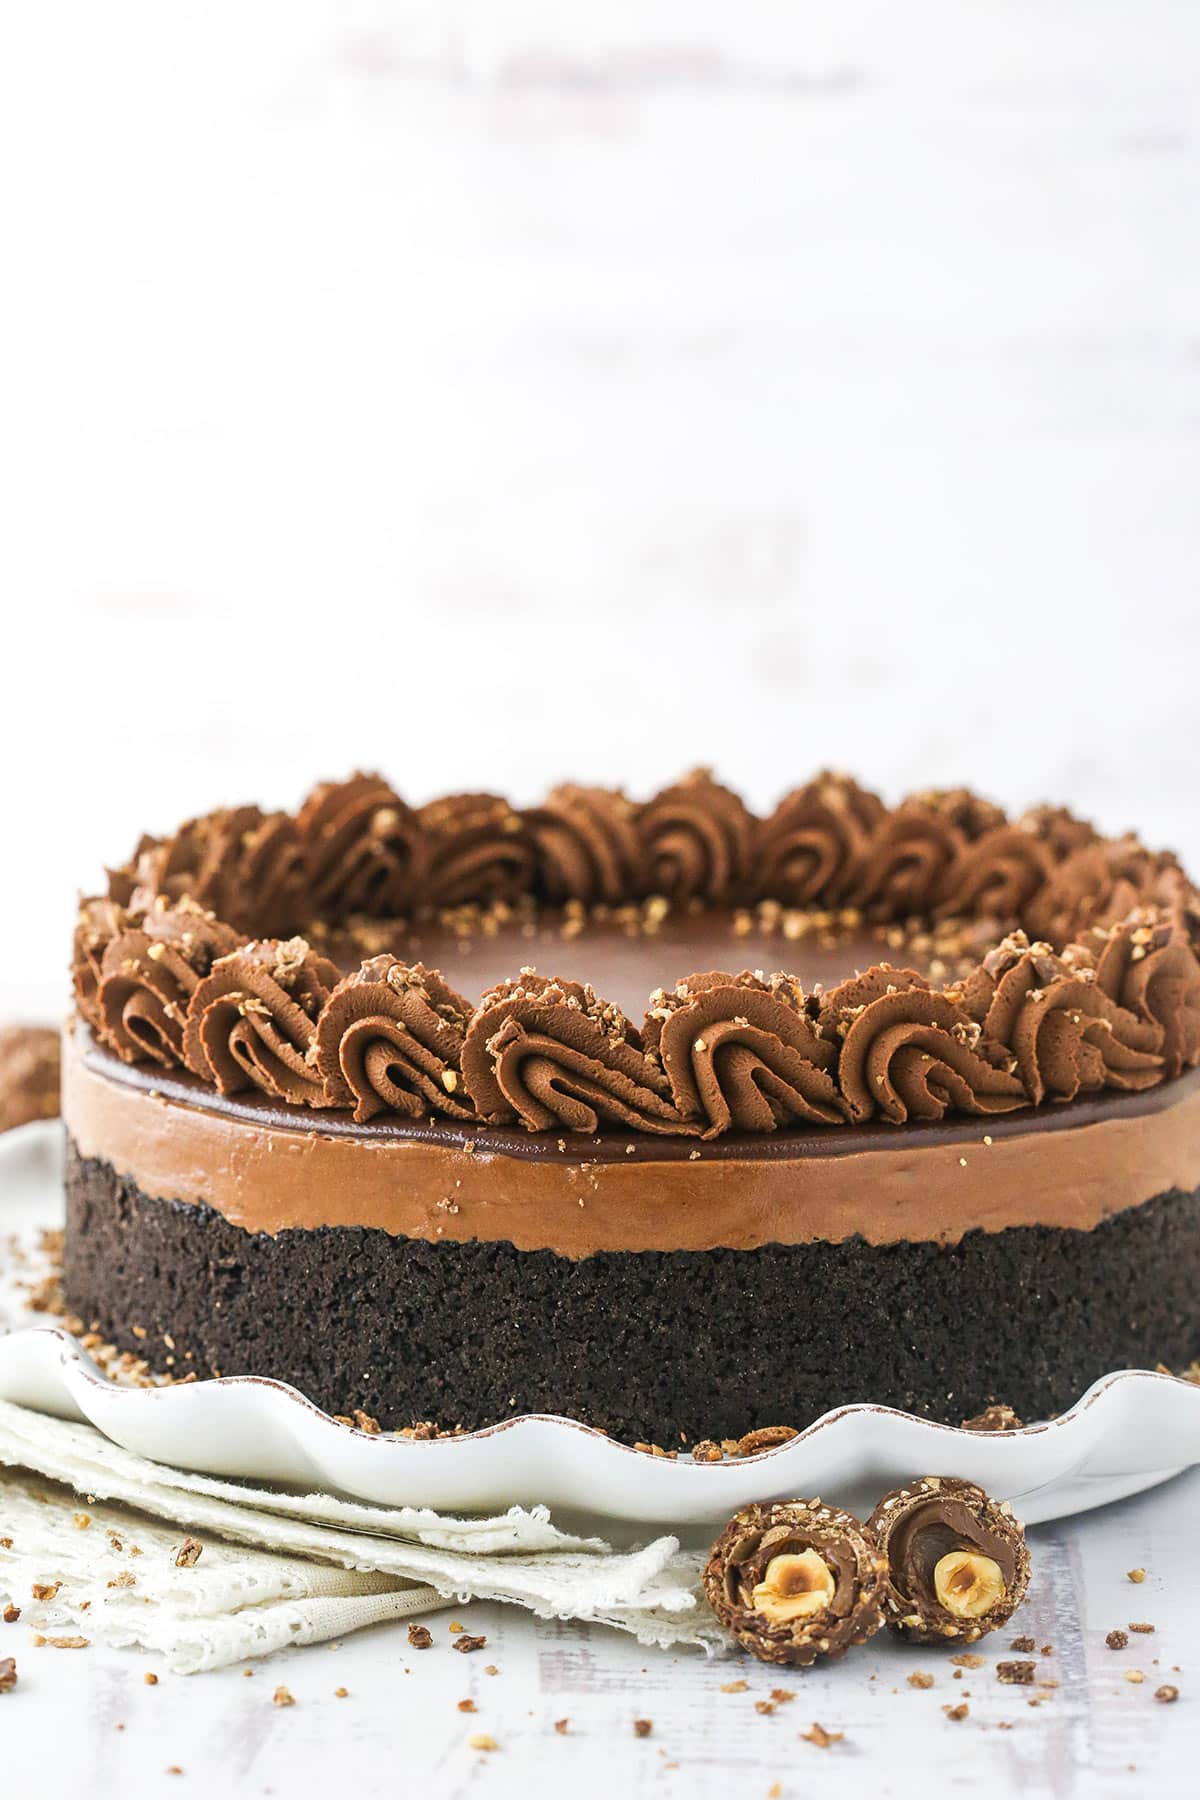 A chocolate hazelnut cheesecake on a kitchen countertop beside a halved Ferrero Rocher chocolate